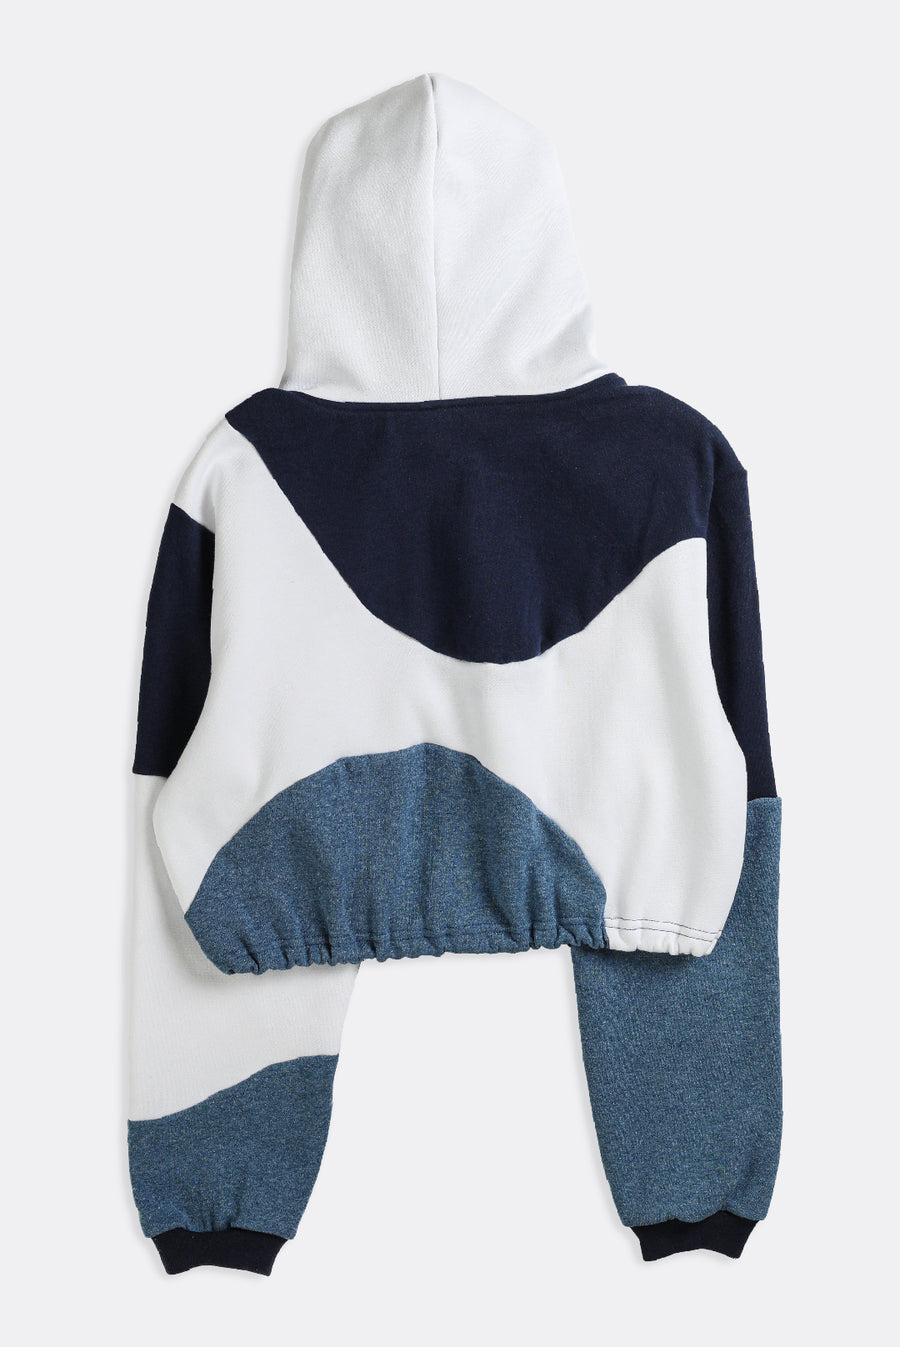 Rework Polo Wave Crop Sweatshirt - XS